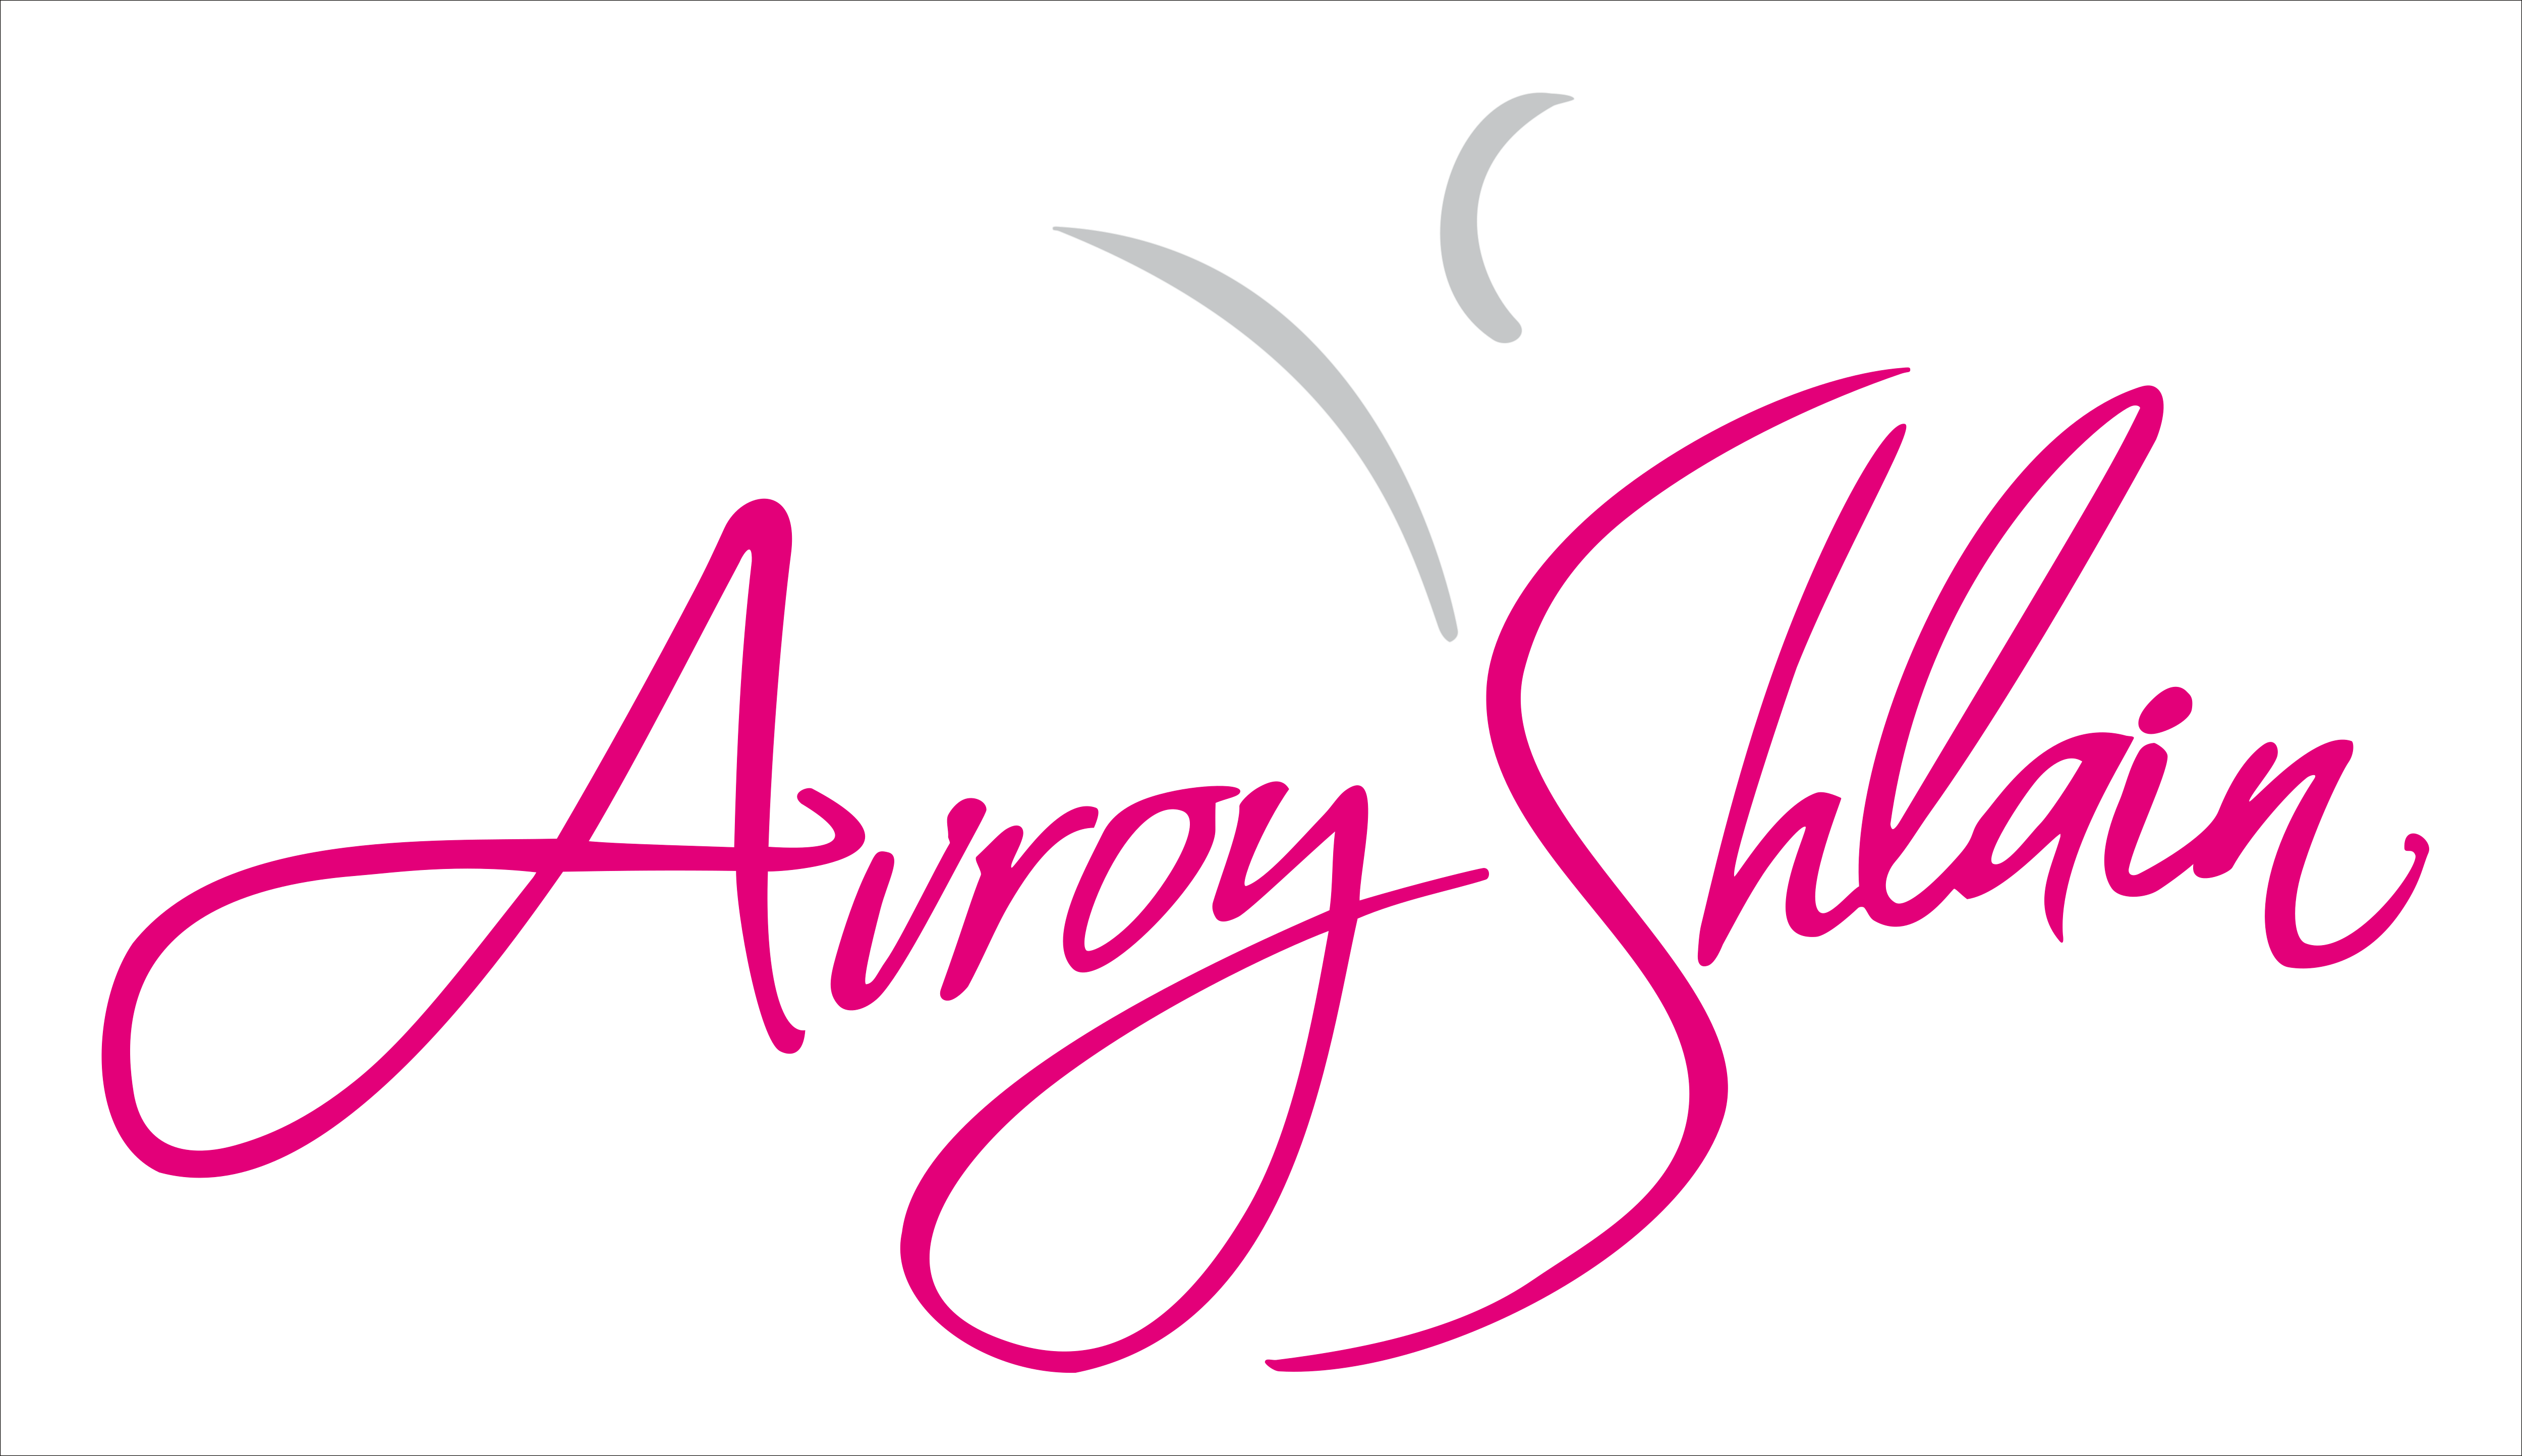 Avroy Shlain – Logos Download